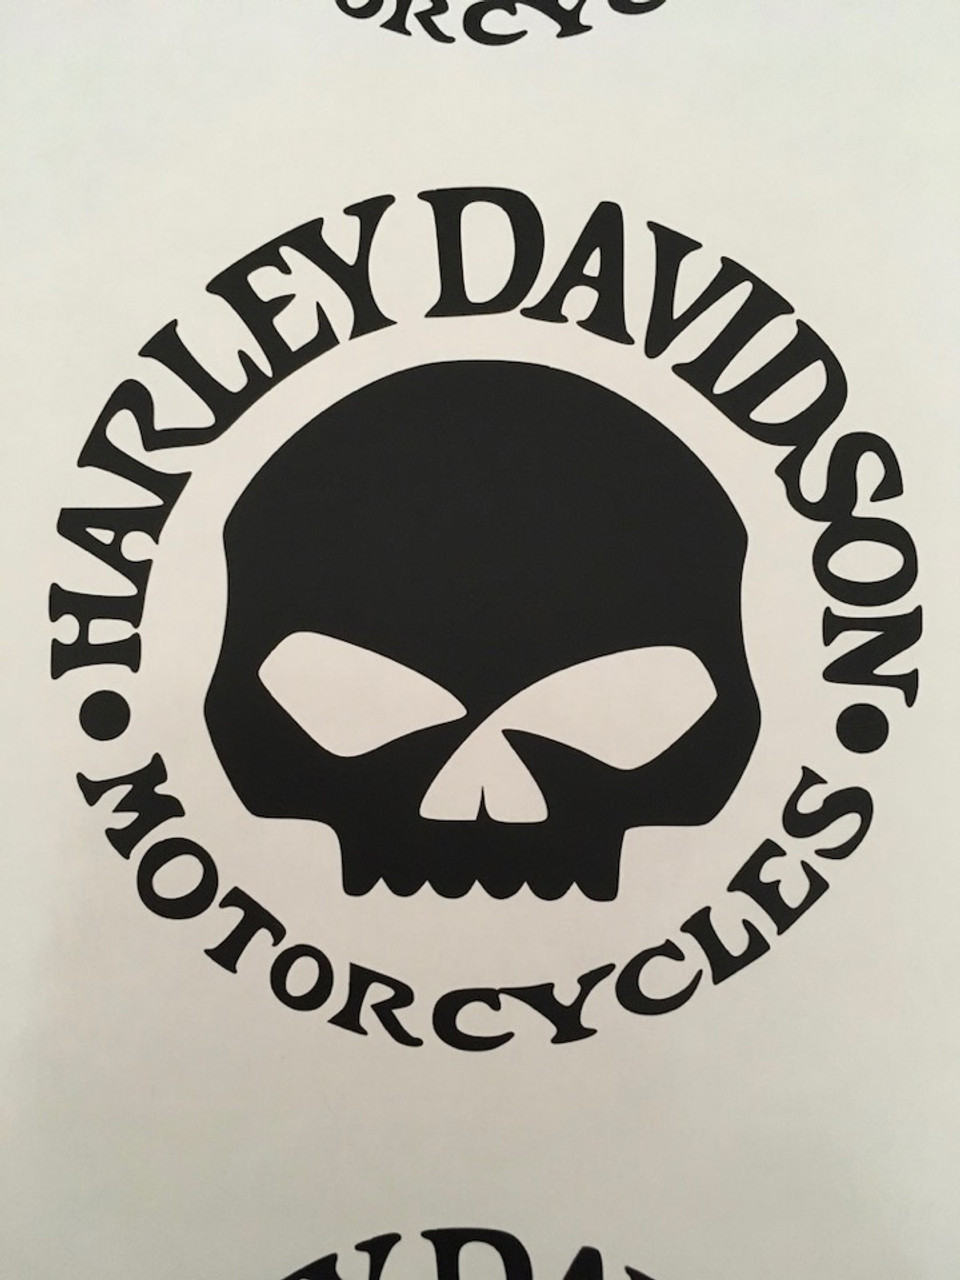 Vinyl and stickers harley davidson